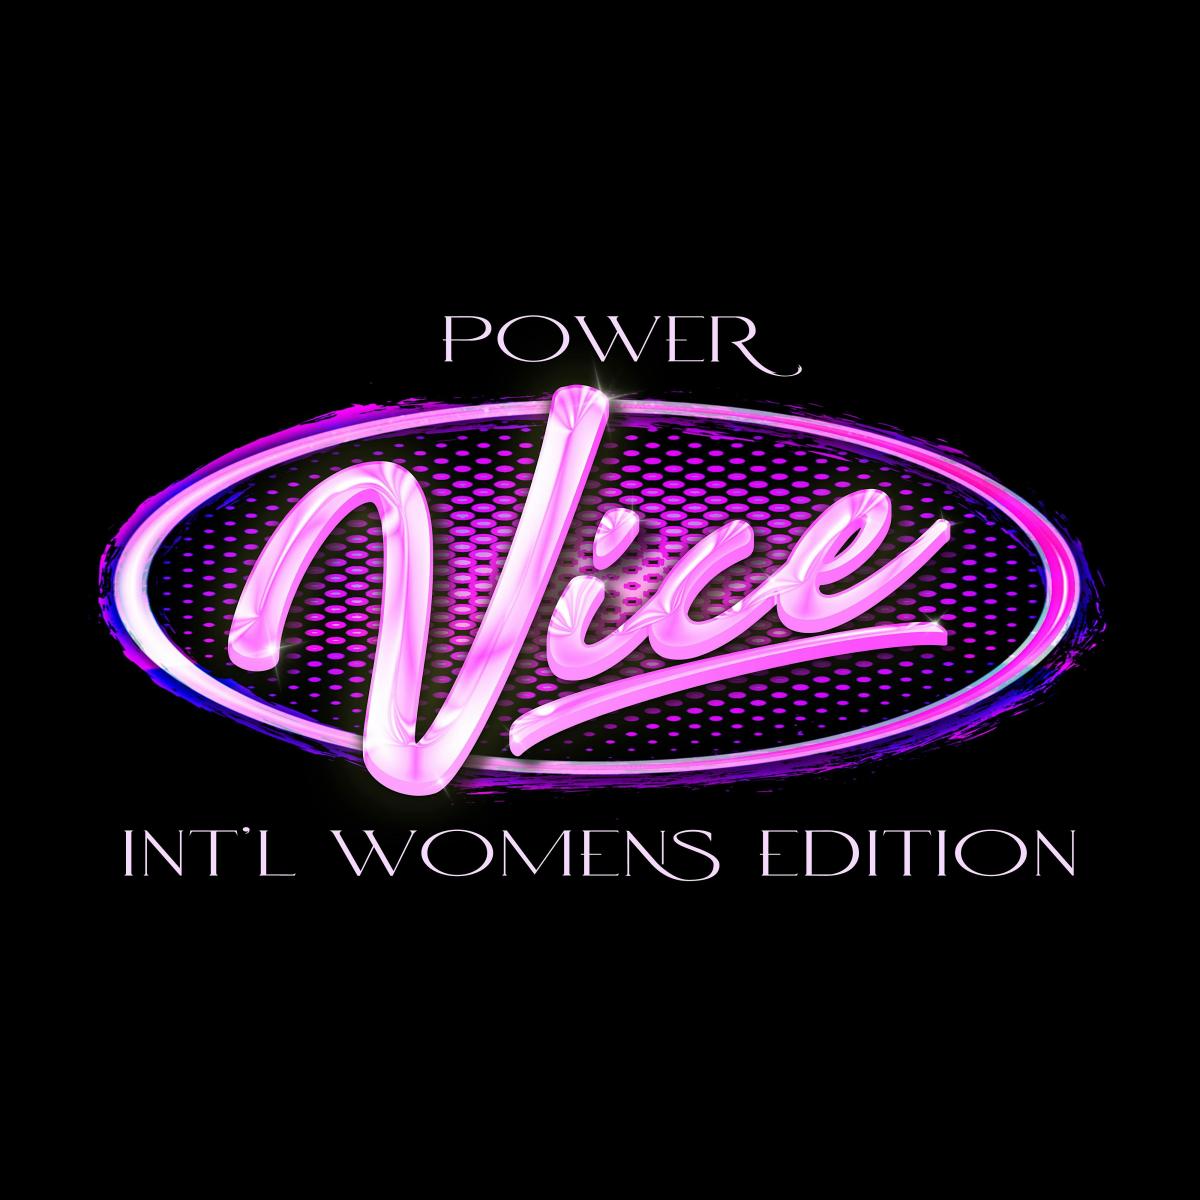 V.I.C.E. Power  flyer or graphic.